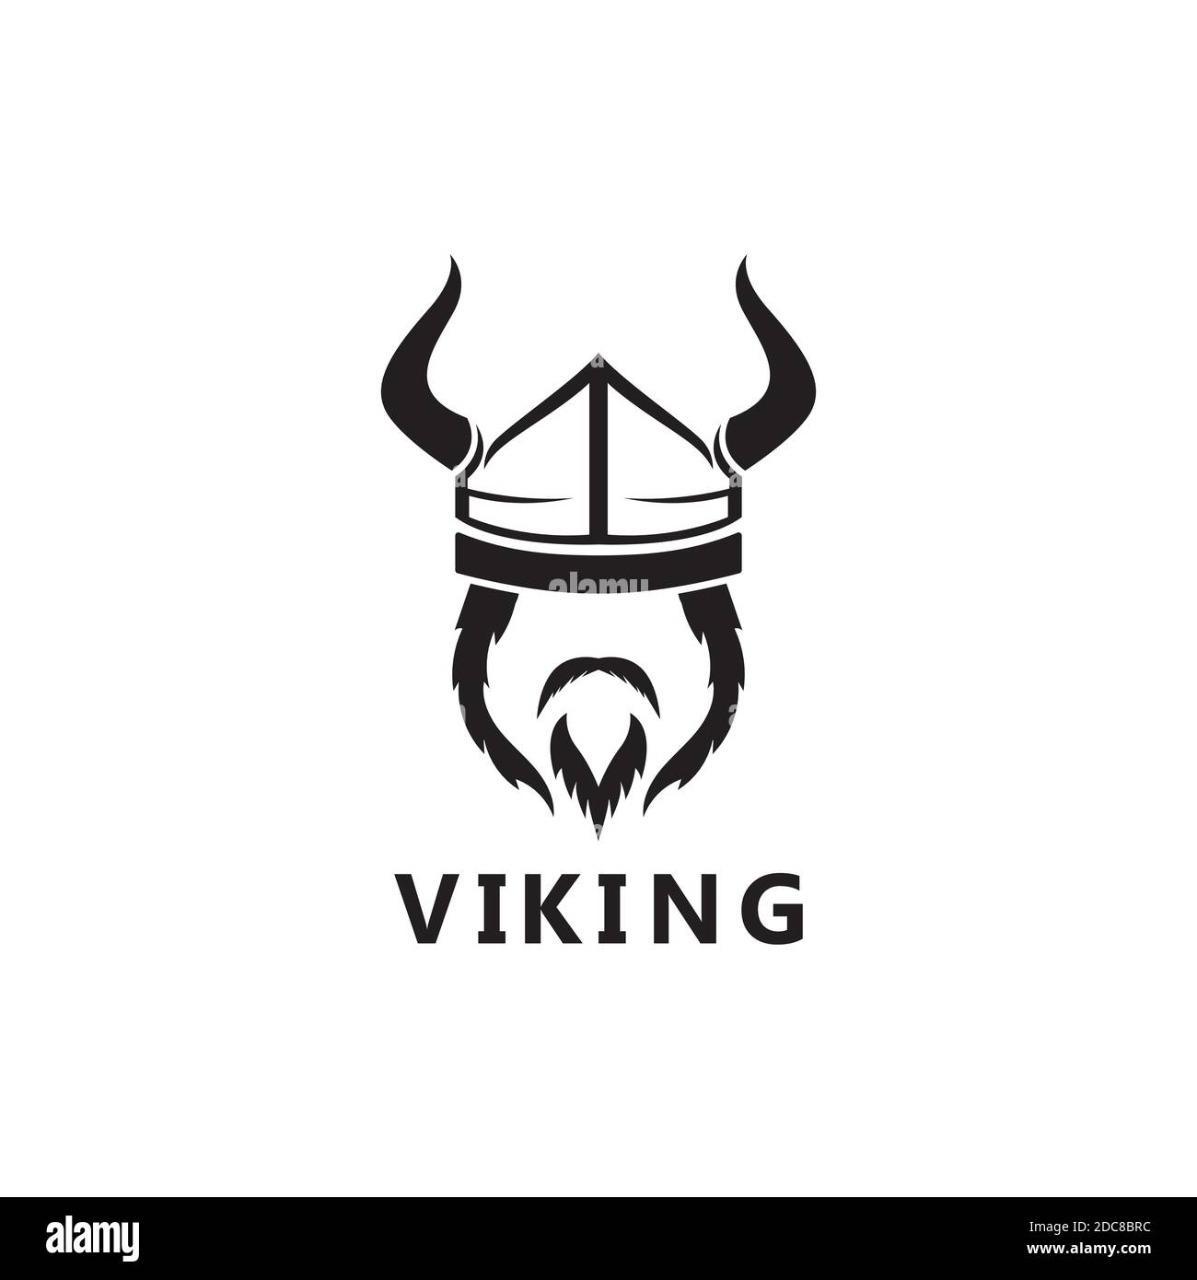 Vikingo95?s=x+rhuibgic2dfcqddqdewpthebvjl2lwryww1nmaaji=